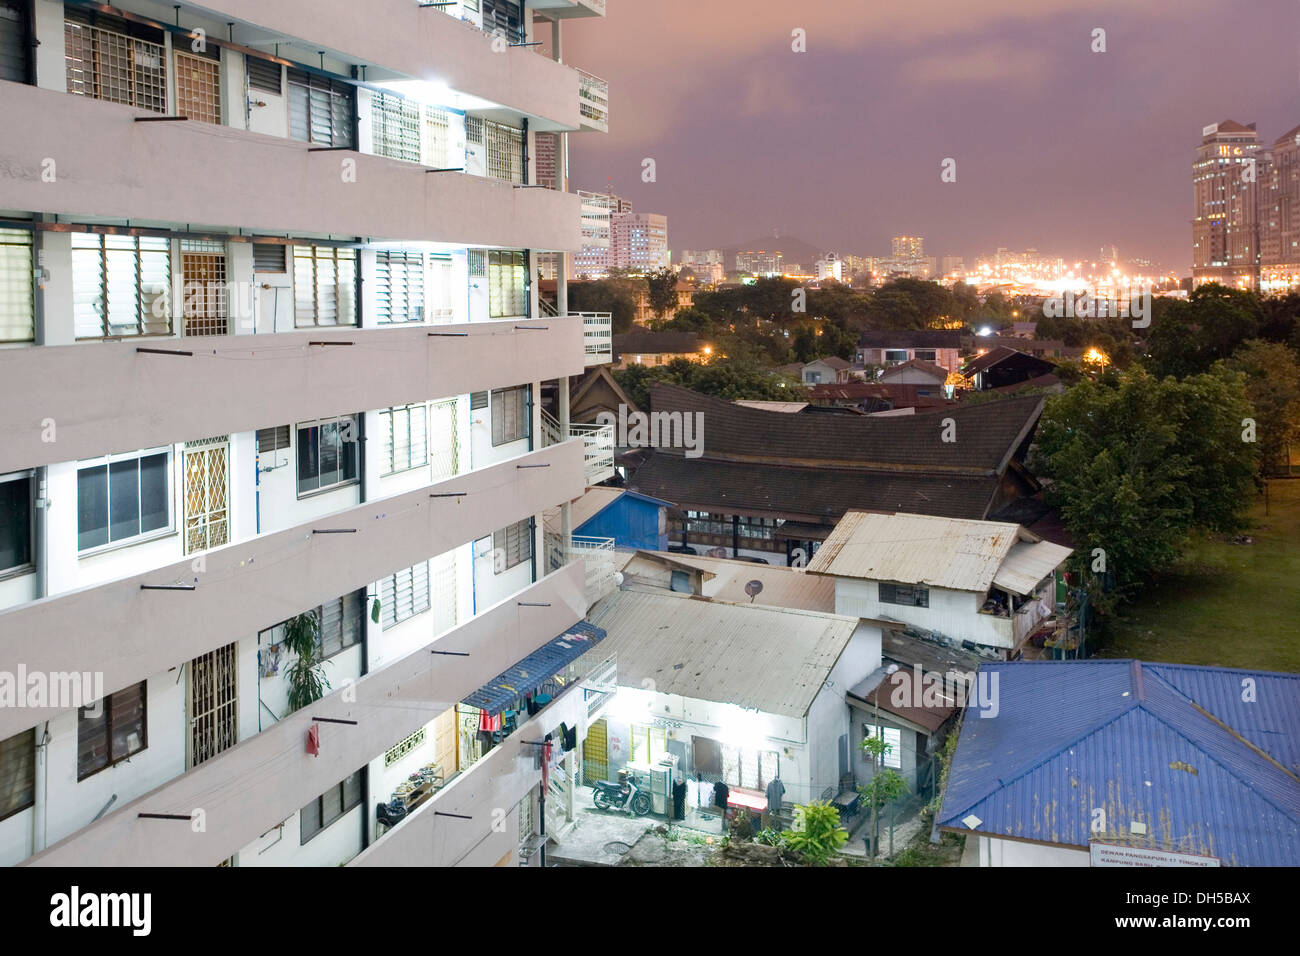 Apartment house, Kampung Baru district, Kampung Baru, Kuala Lumpur